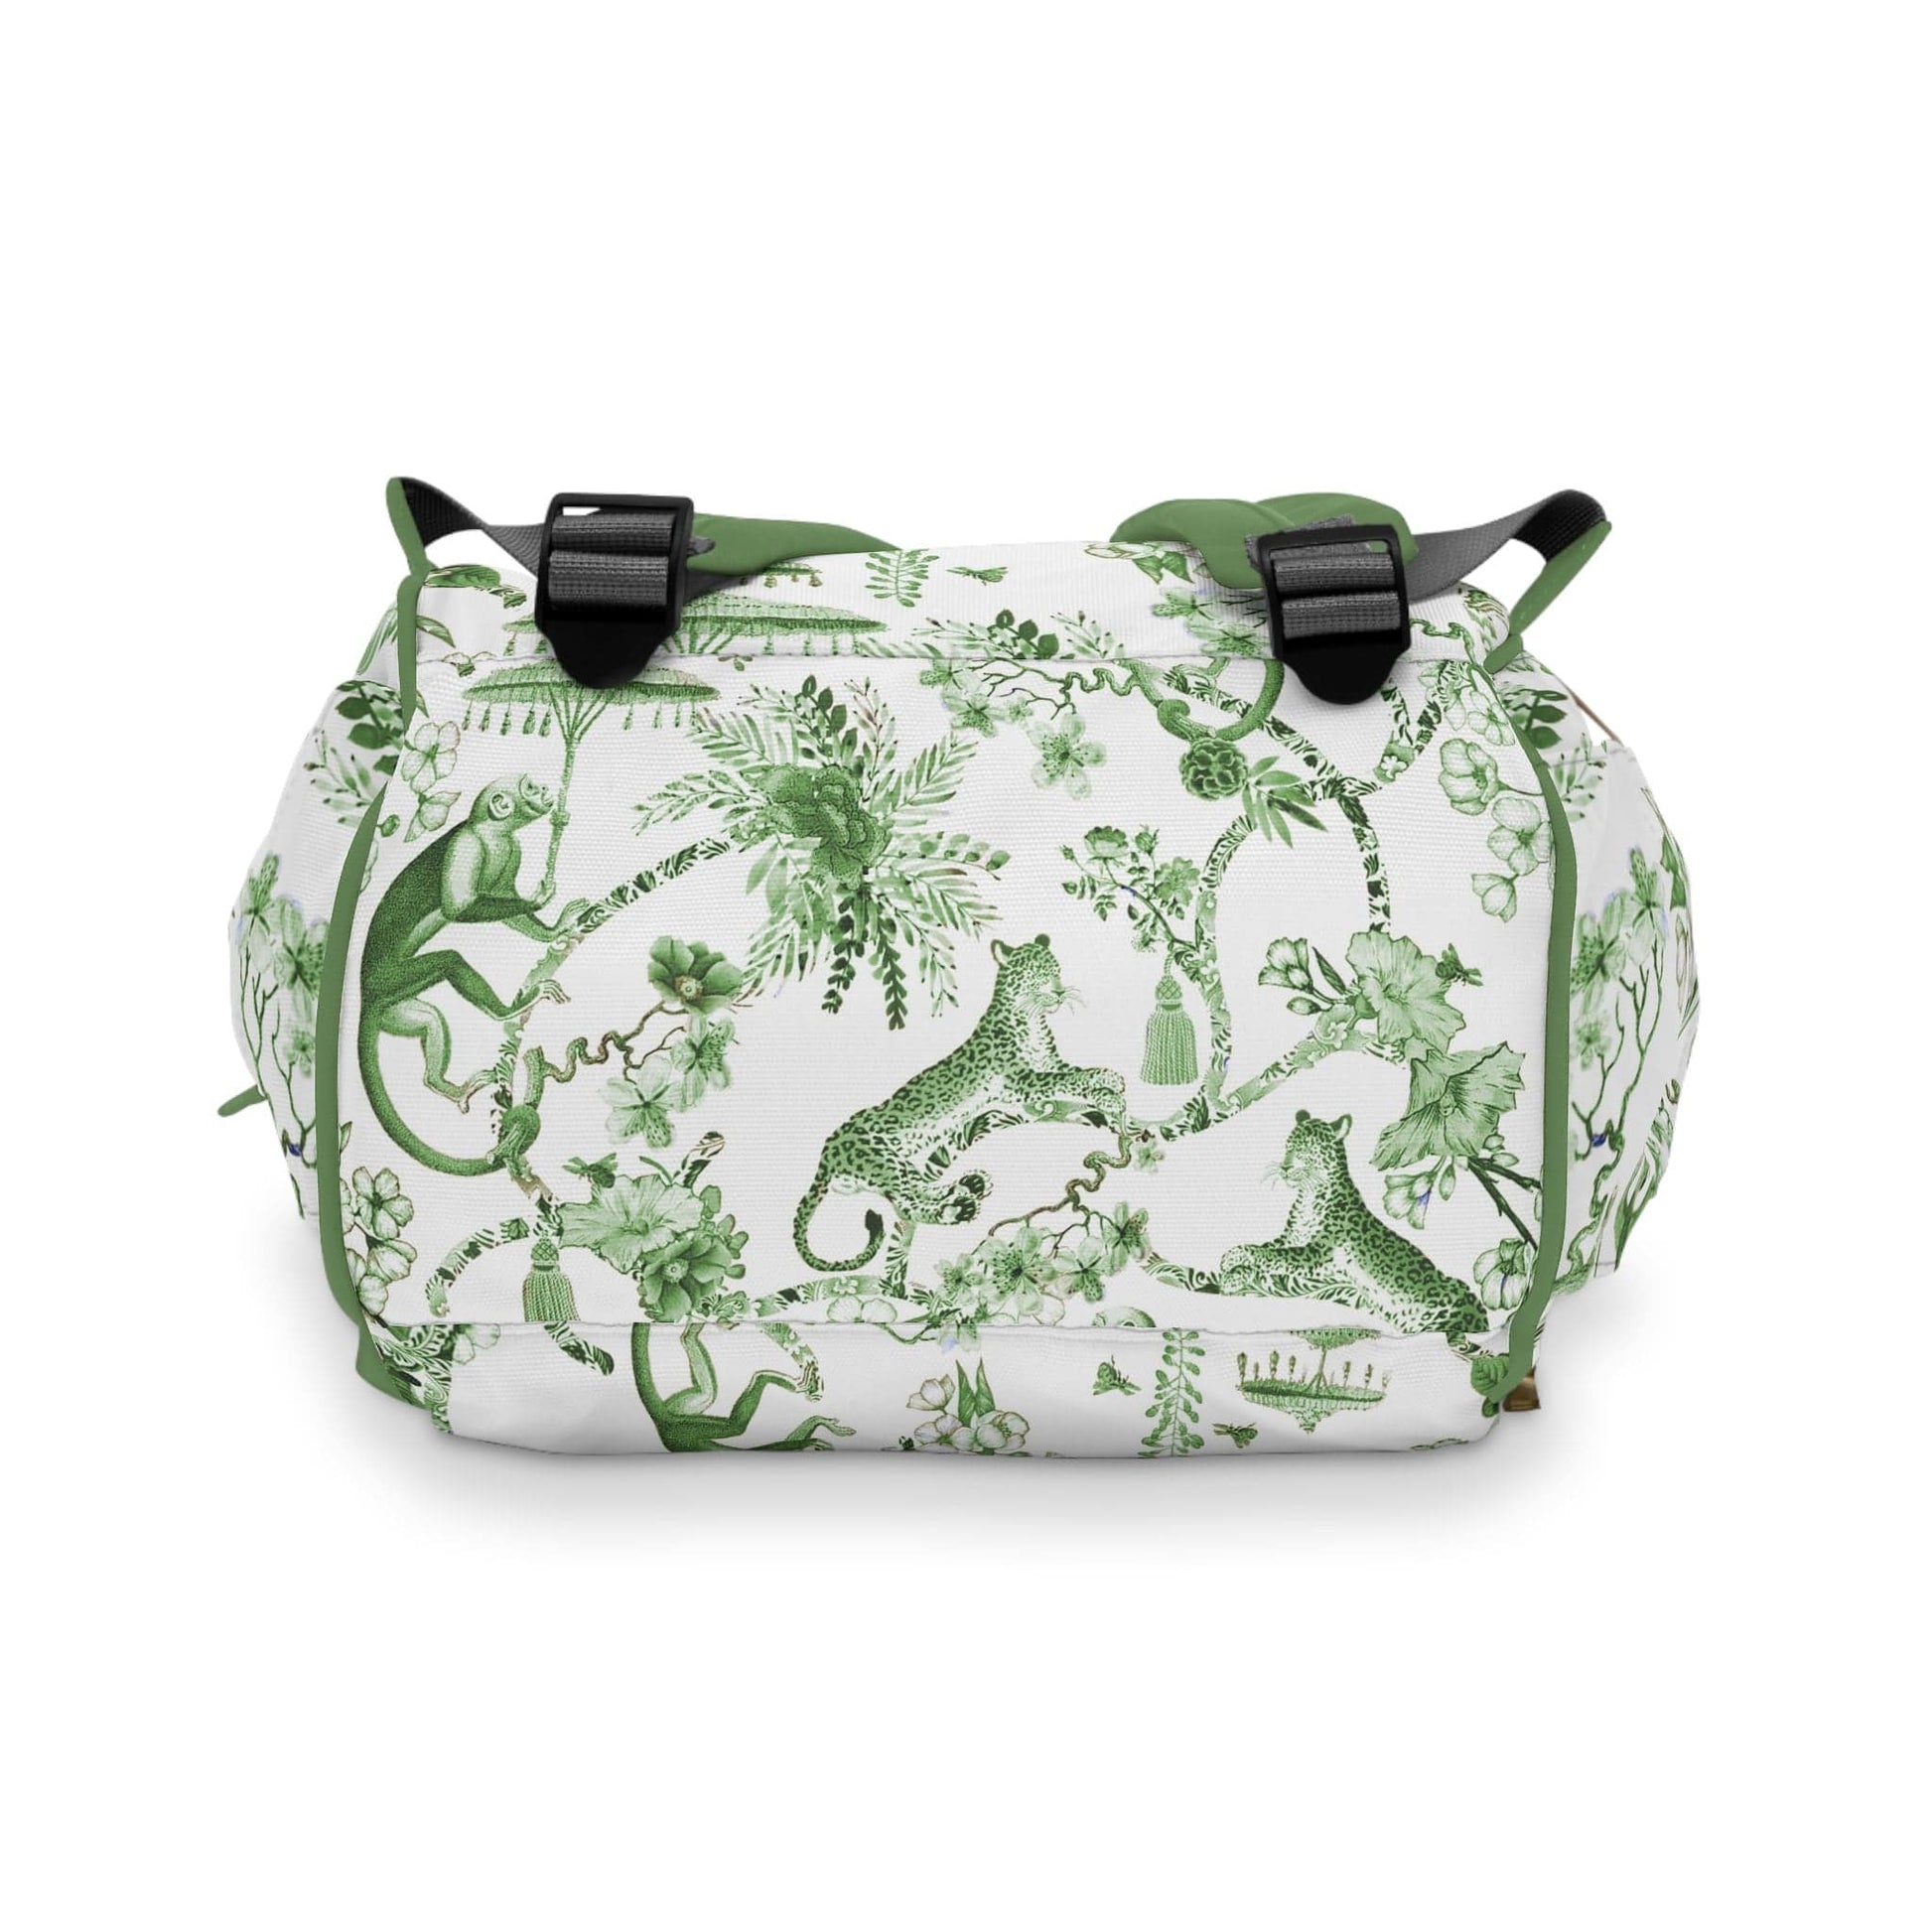 Kate McEnroe New York Floral Green and White Chinoiserie Jungle Multifunctional Backpack, Diaper Bag, Weekender Bag, Carry-on Luggage Bag, Multipurpose Backpack Diaper Bags 16805015716788328462